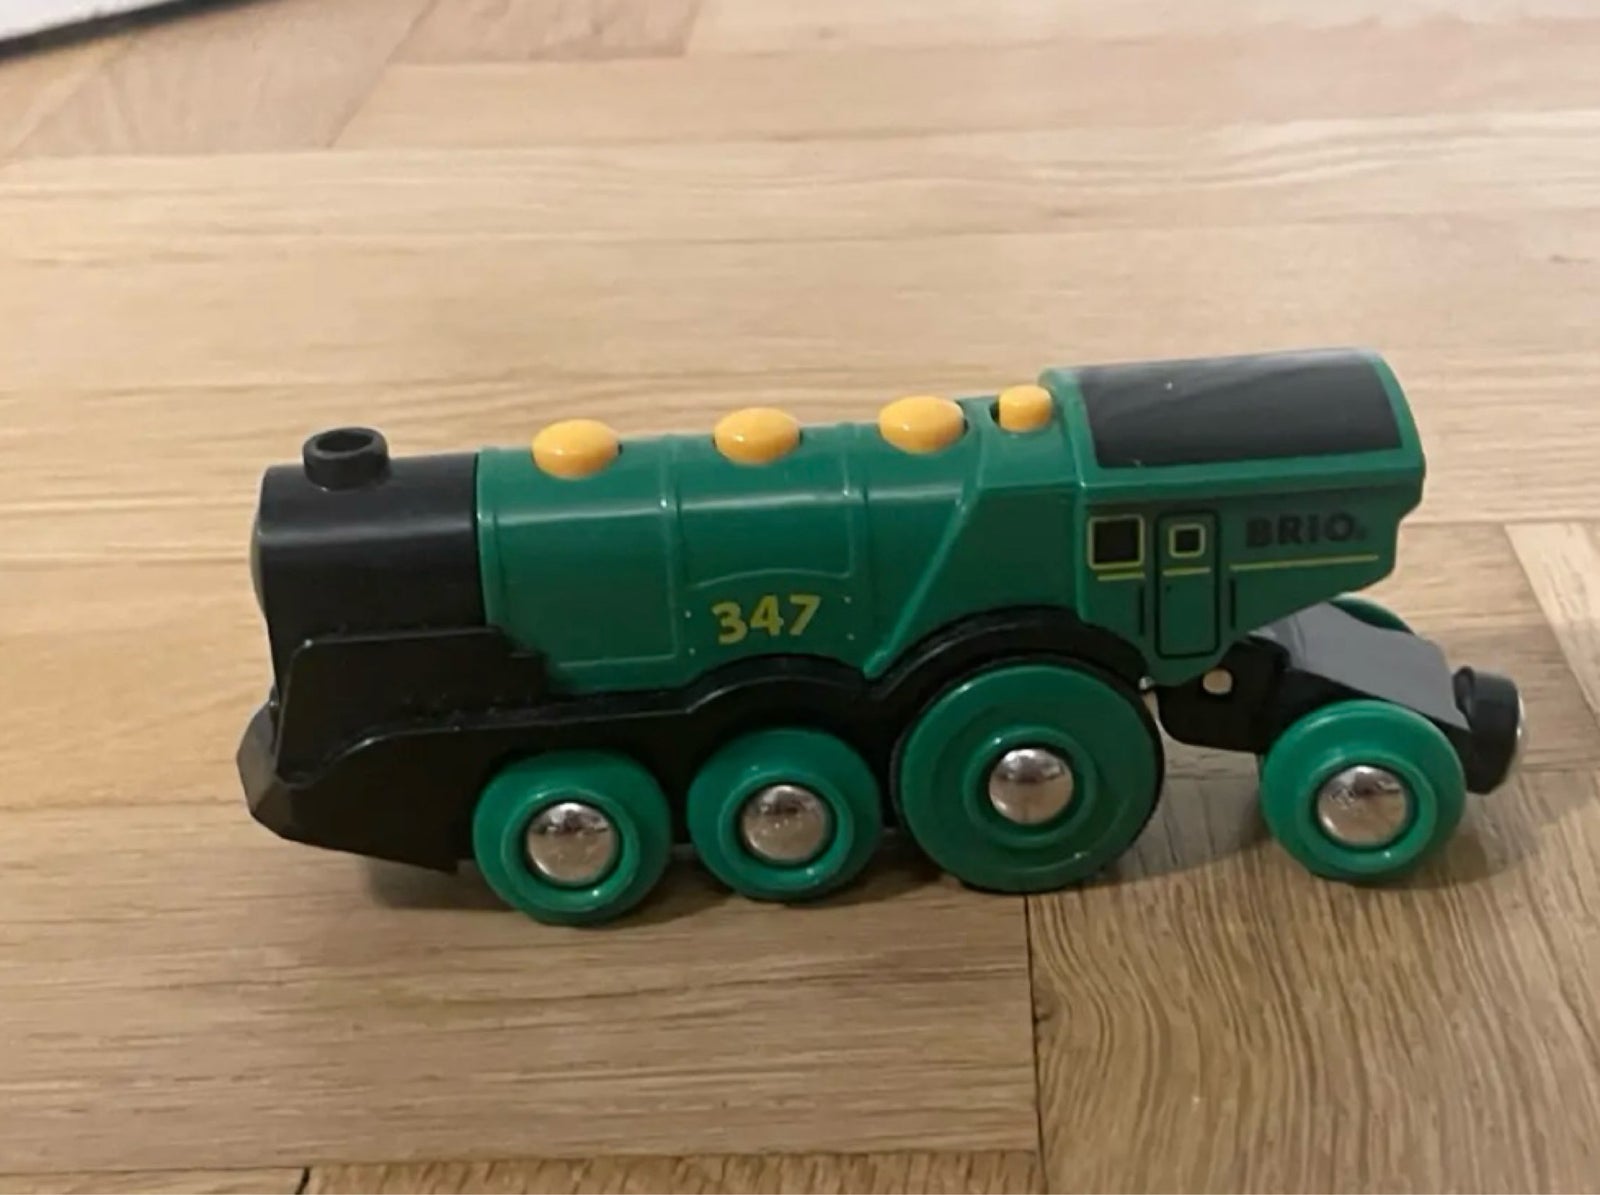 33593 stort grønt batteridrevet lokomotiv